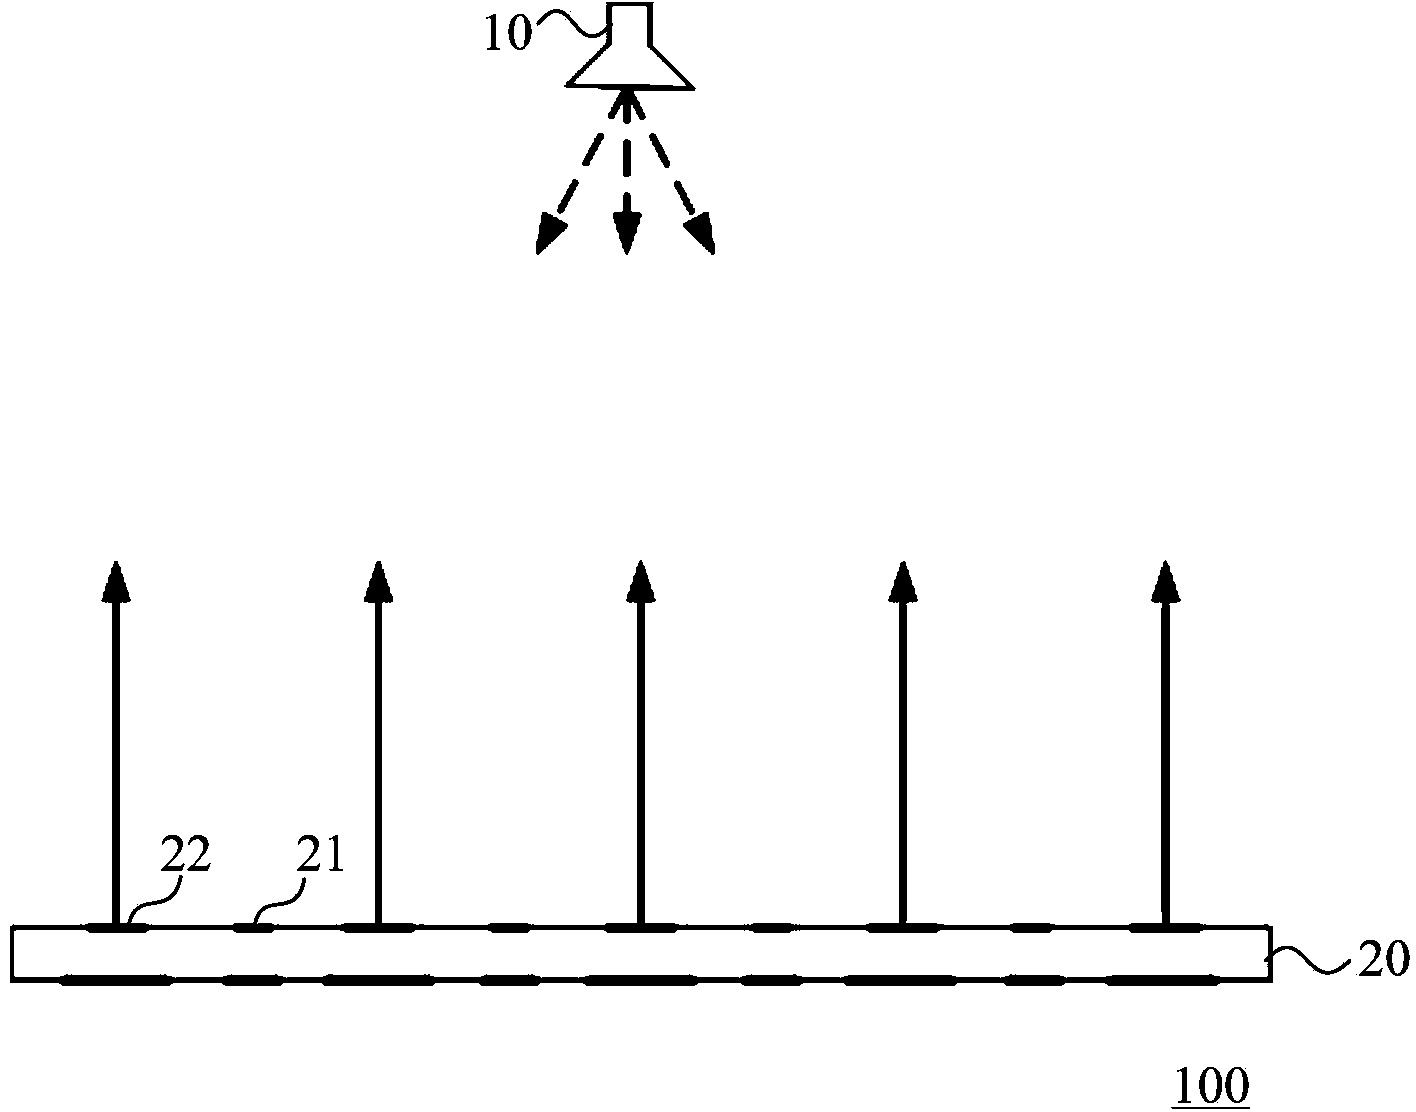 Single-layer dual-frequency circularly-polarized reflective array antenna